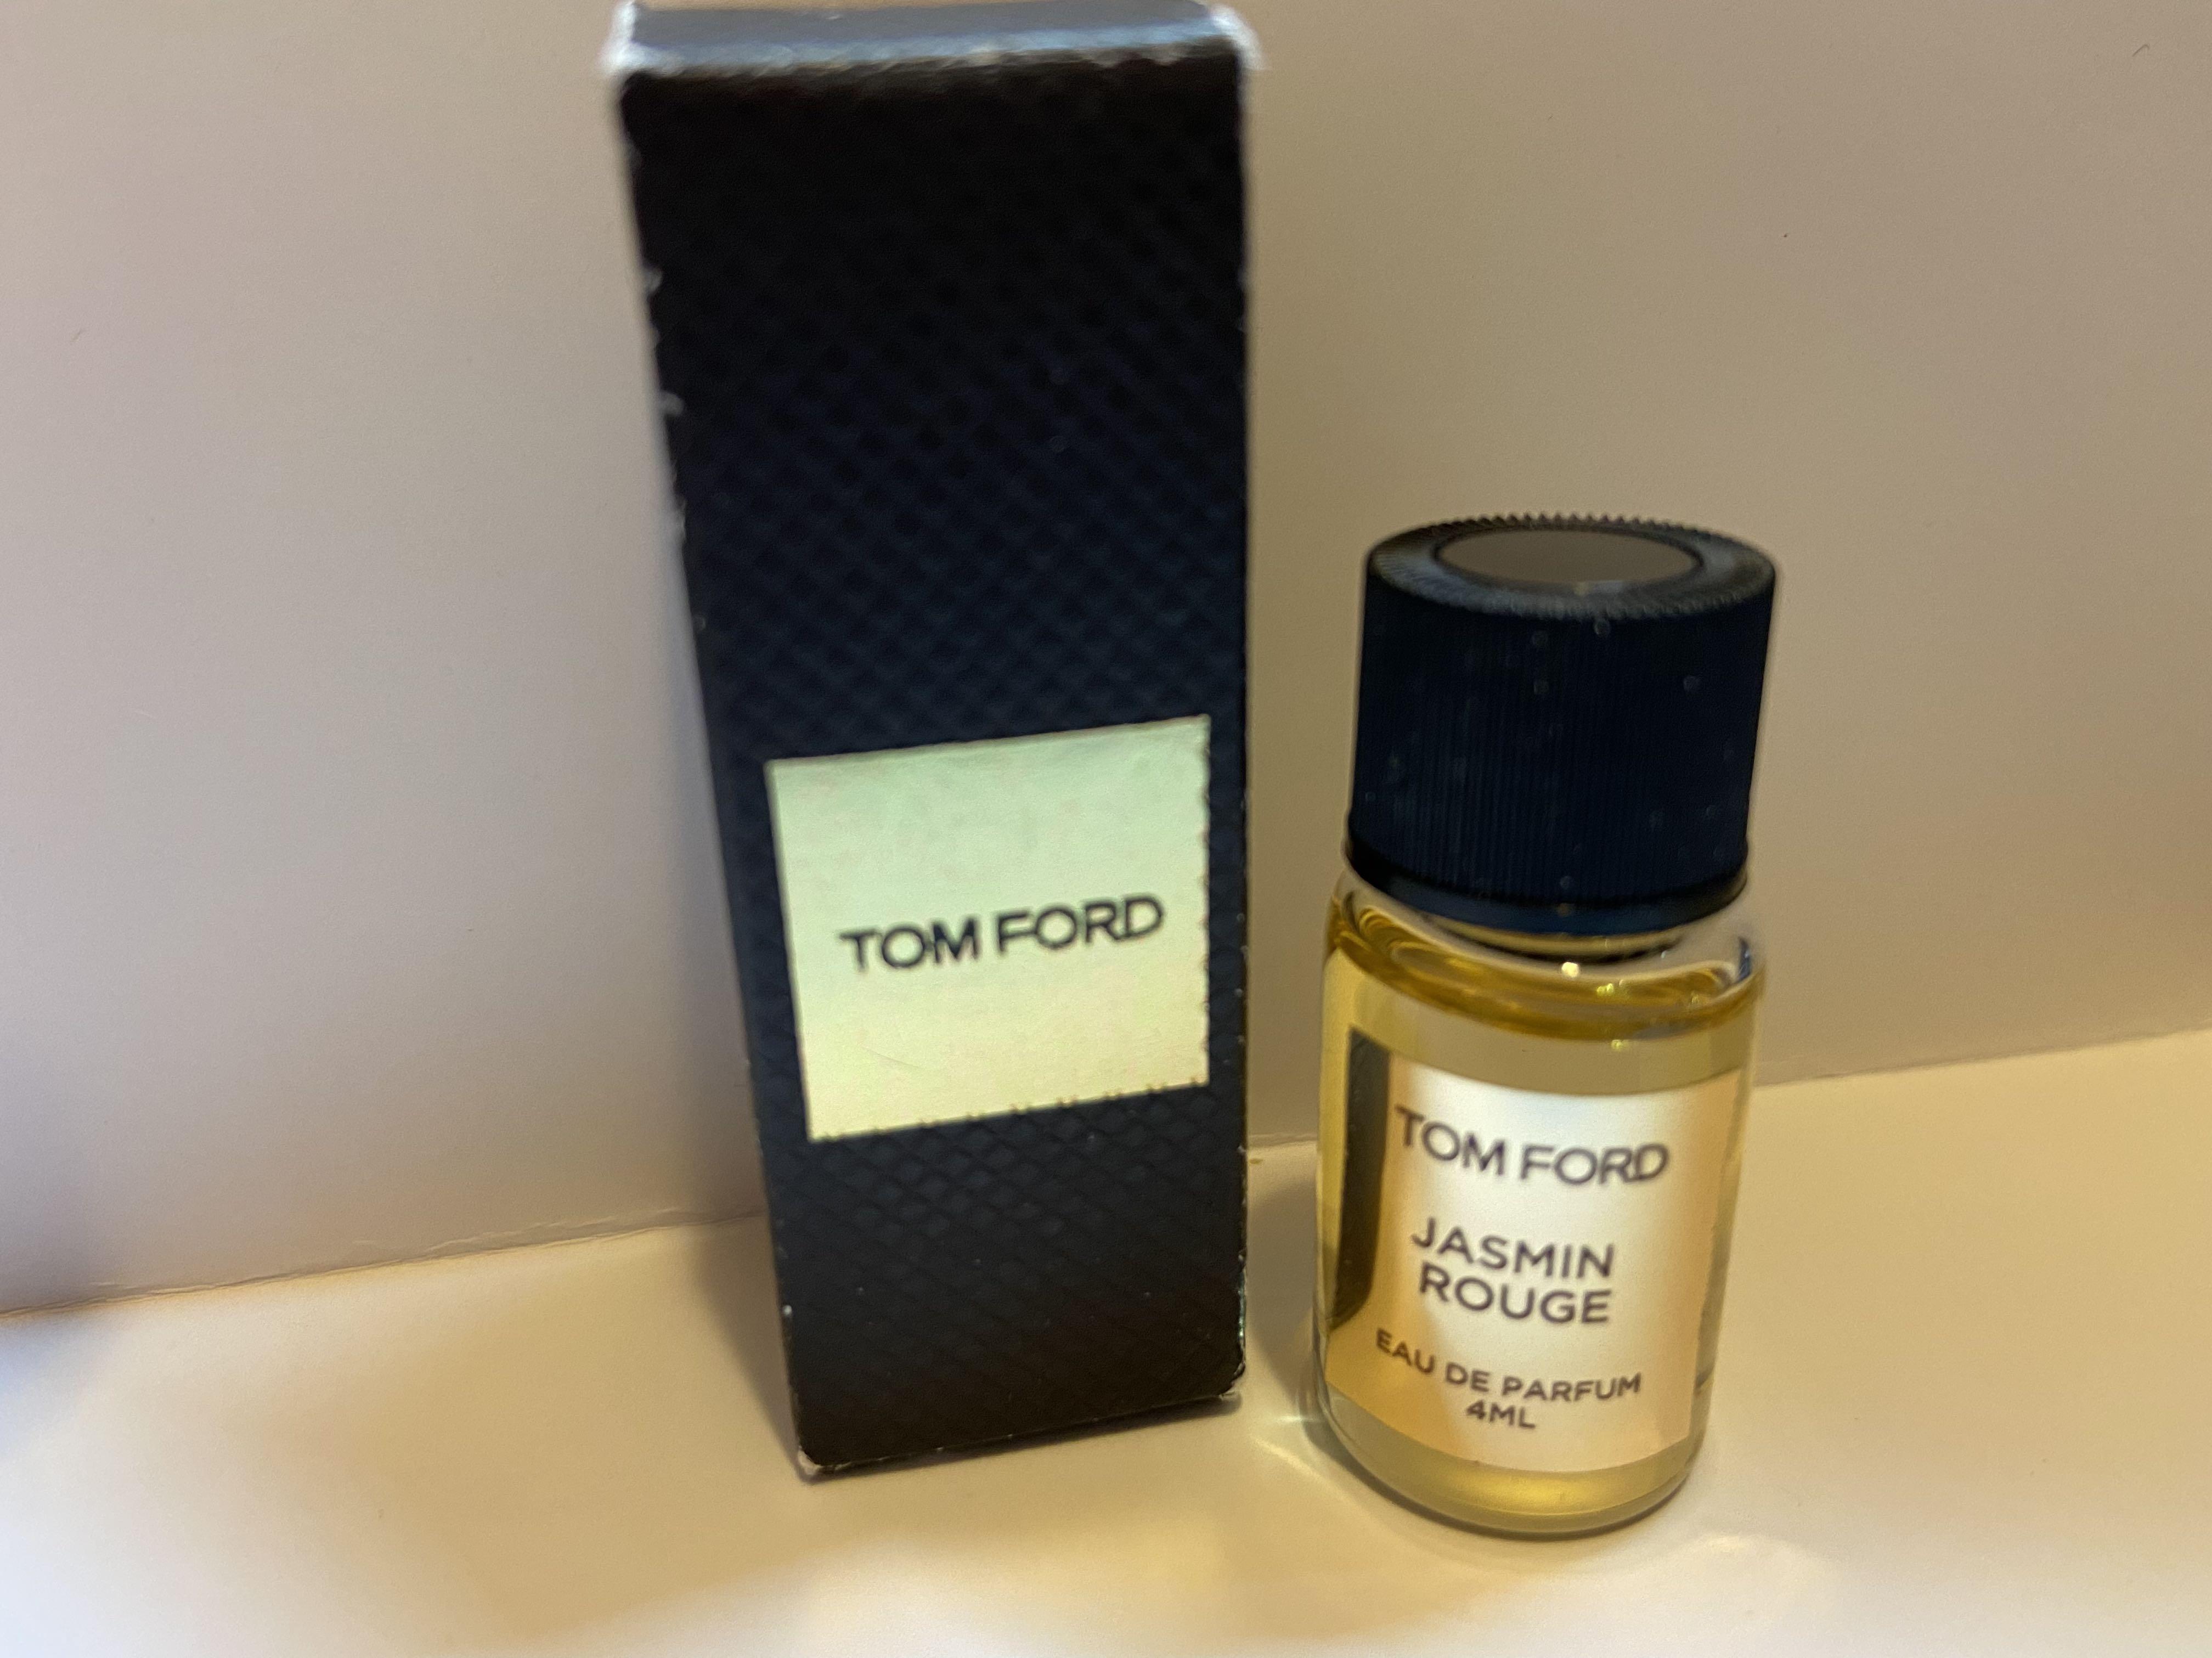 Tom Ford 4ml 香水Jasmin rouge perfume, 美容＆化妝品, 健康及美容